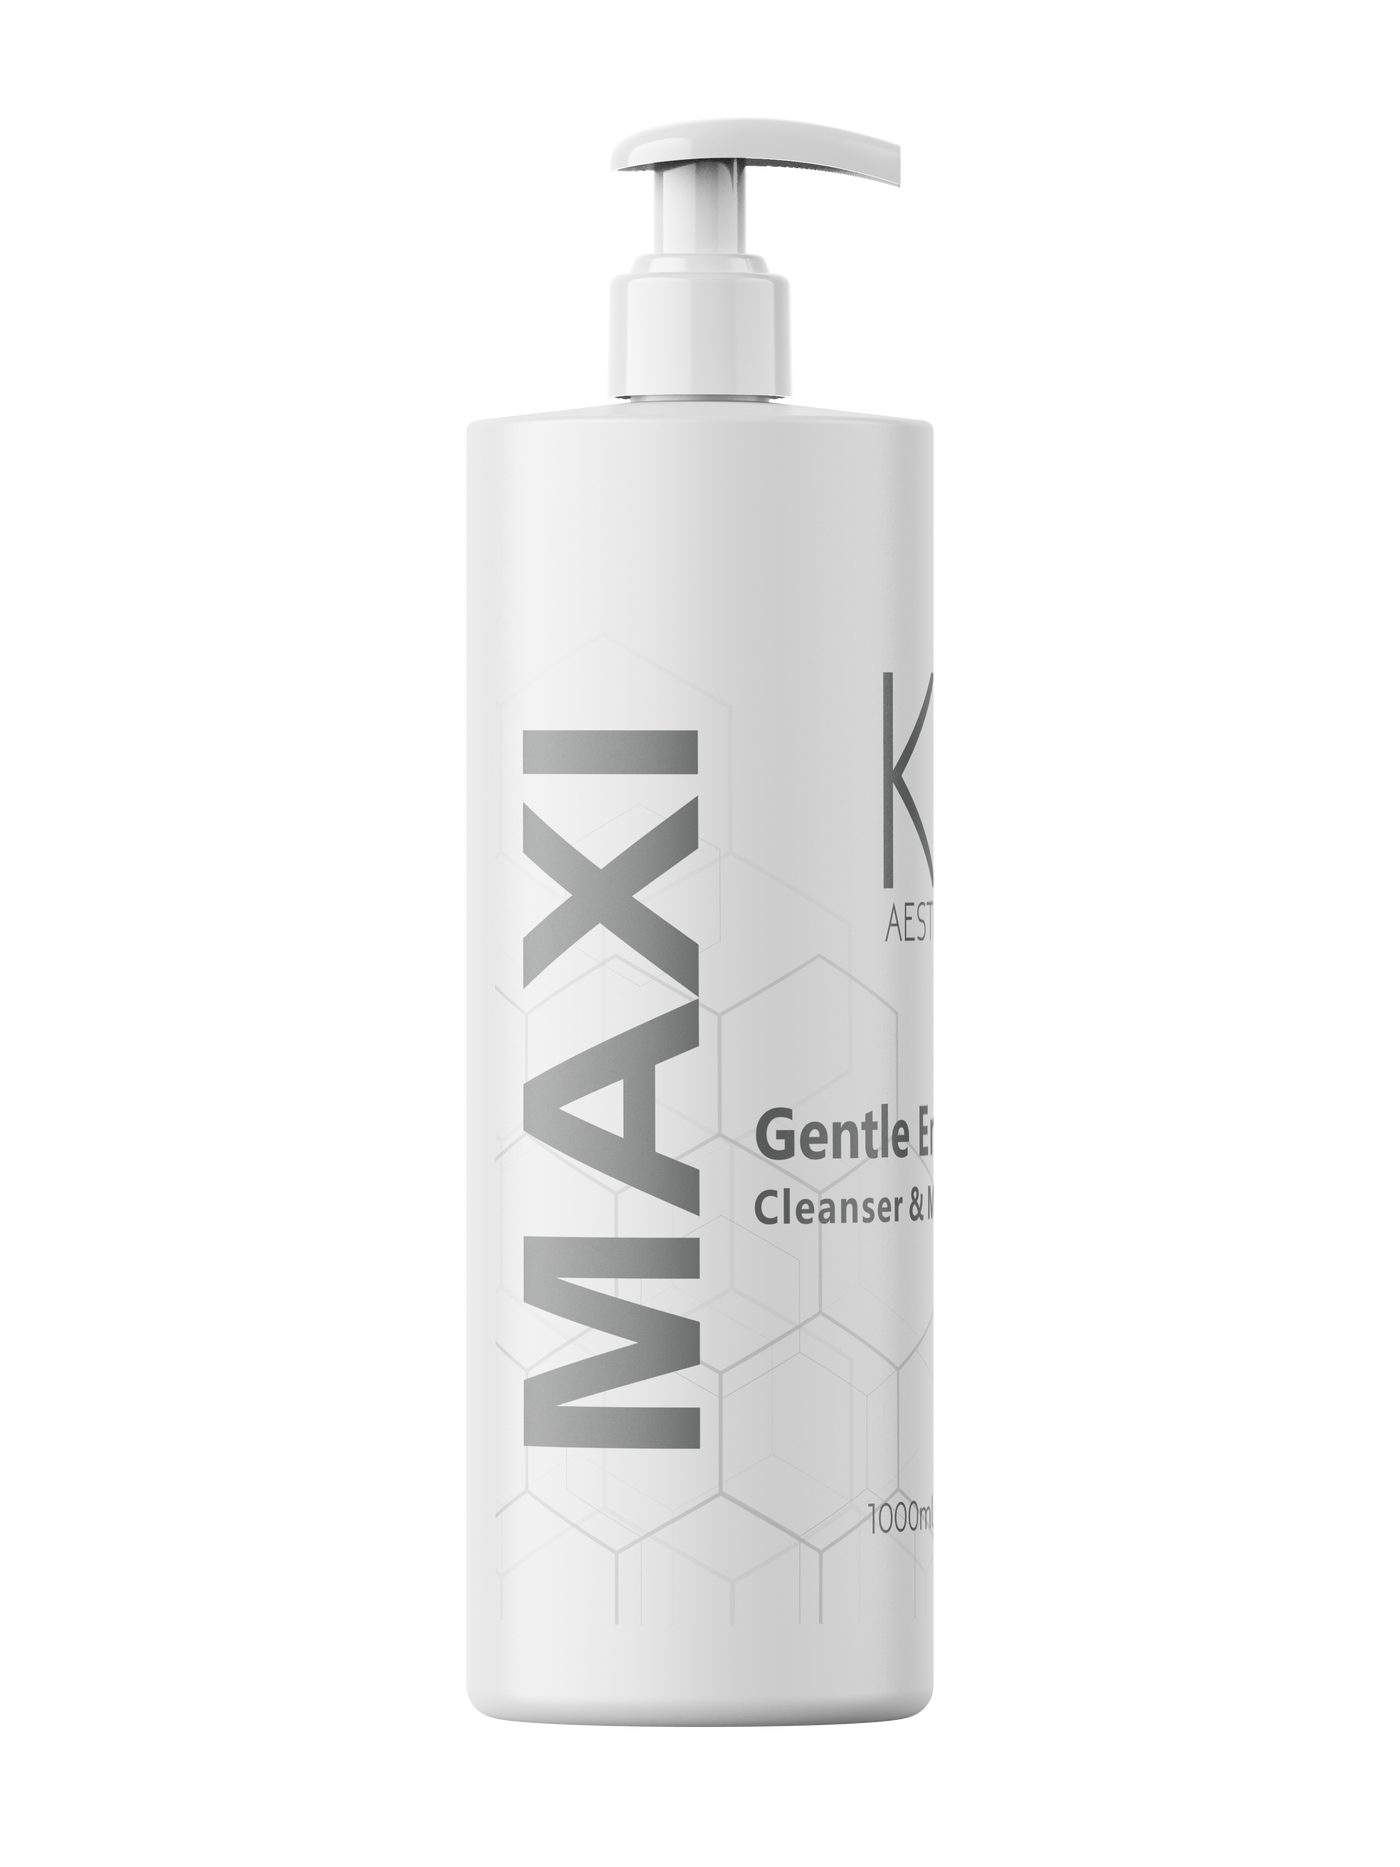 Krx Gentle Enzyme Milk Cleanser + Makeup Remover